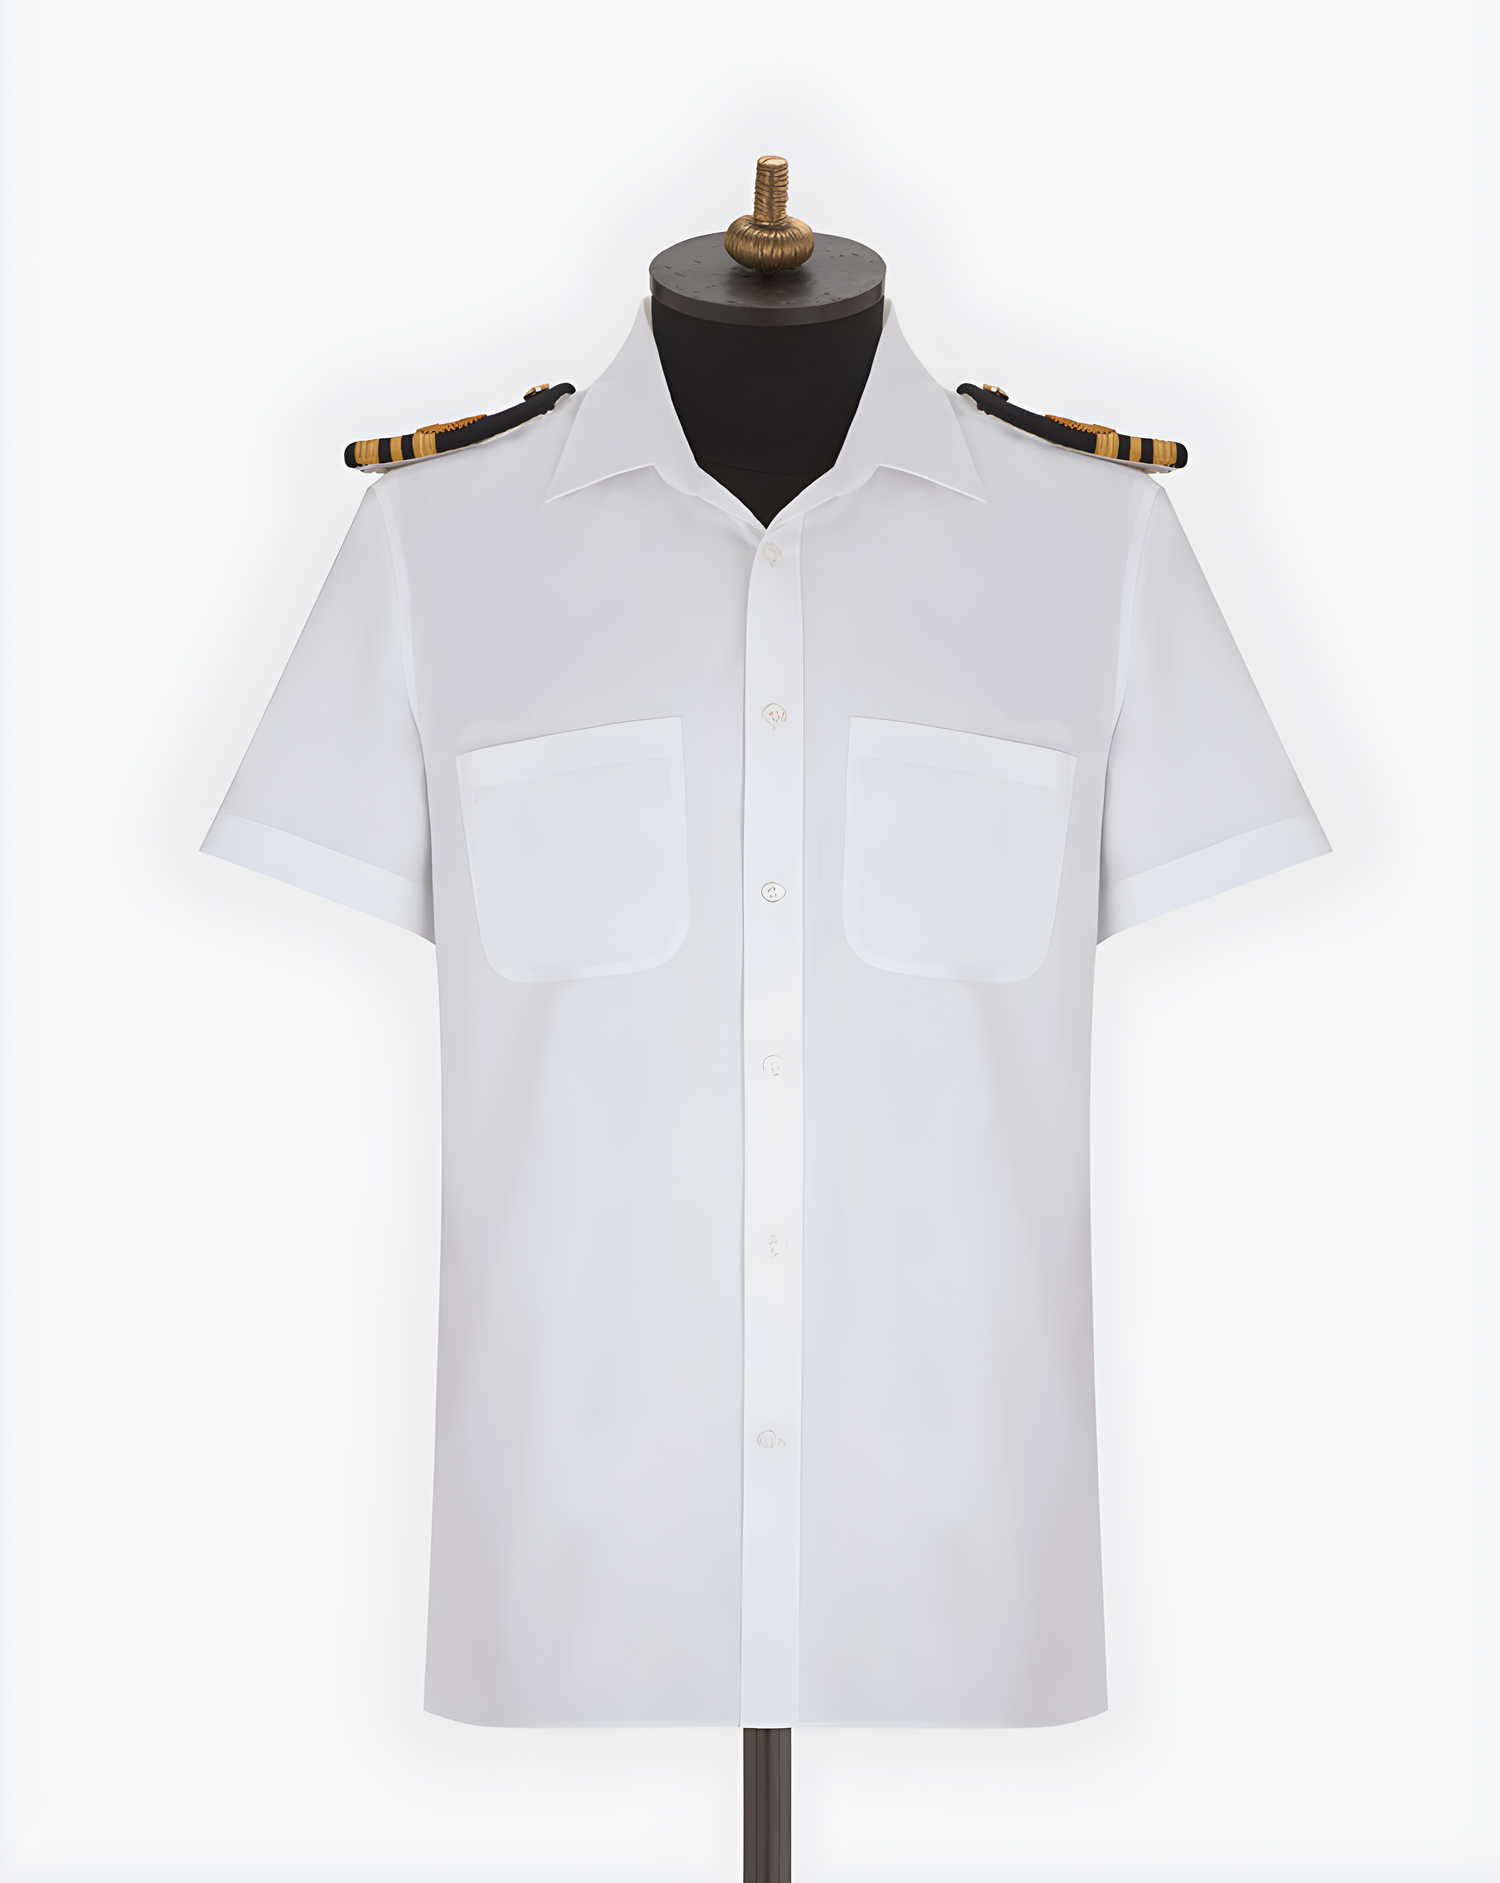 Naval Shirt - Classic Fit Short Sleeve